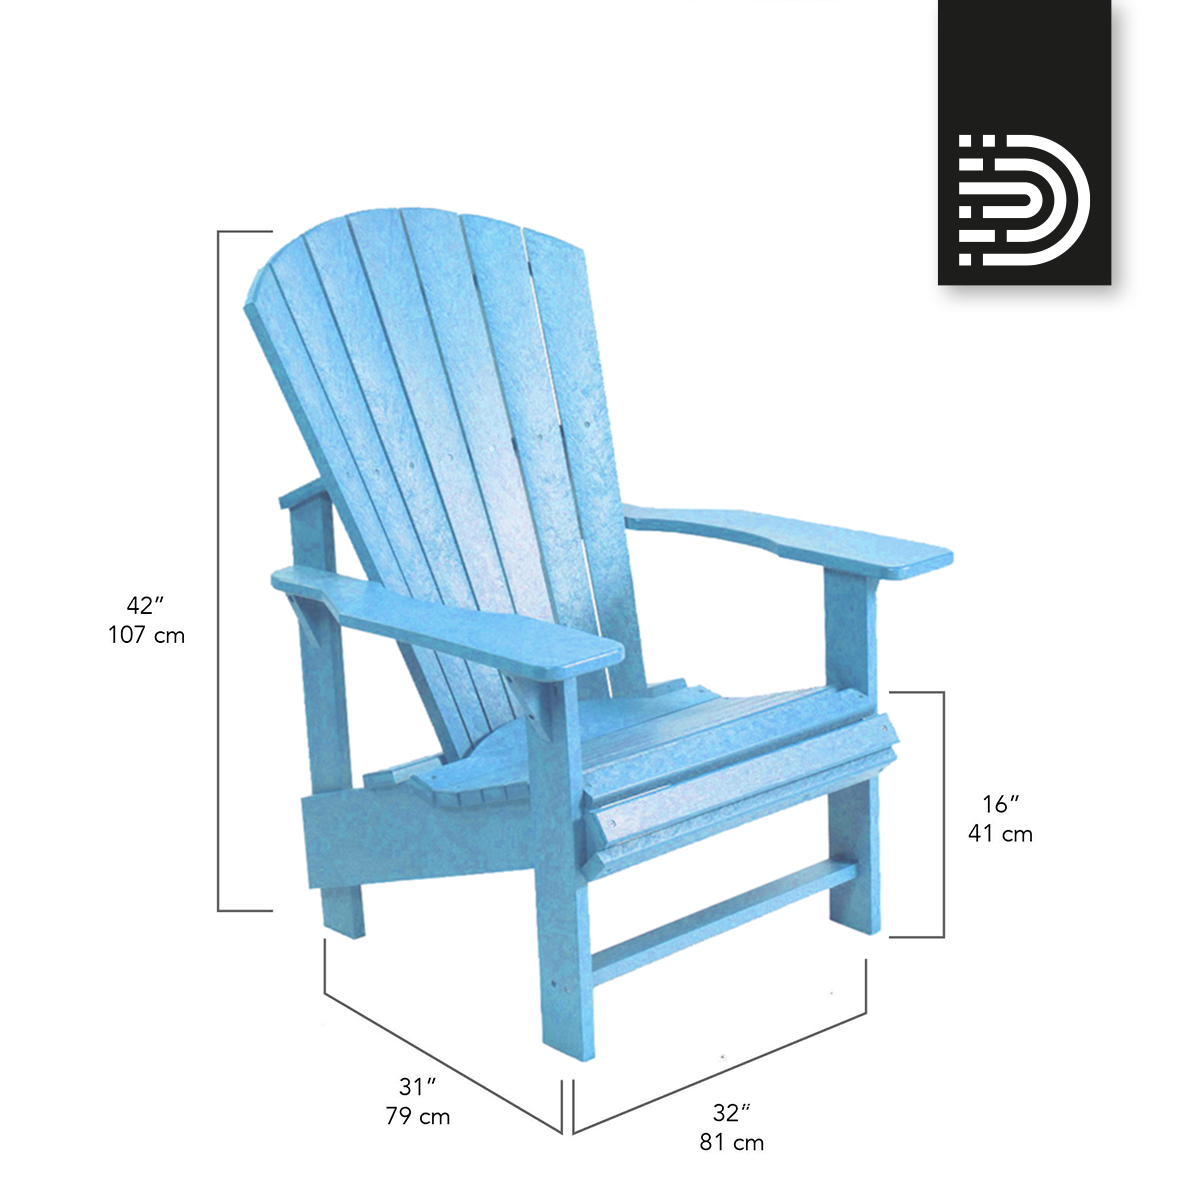 C03 Upright Adirondack Chair - sky blue 12